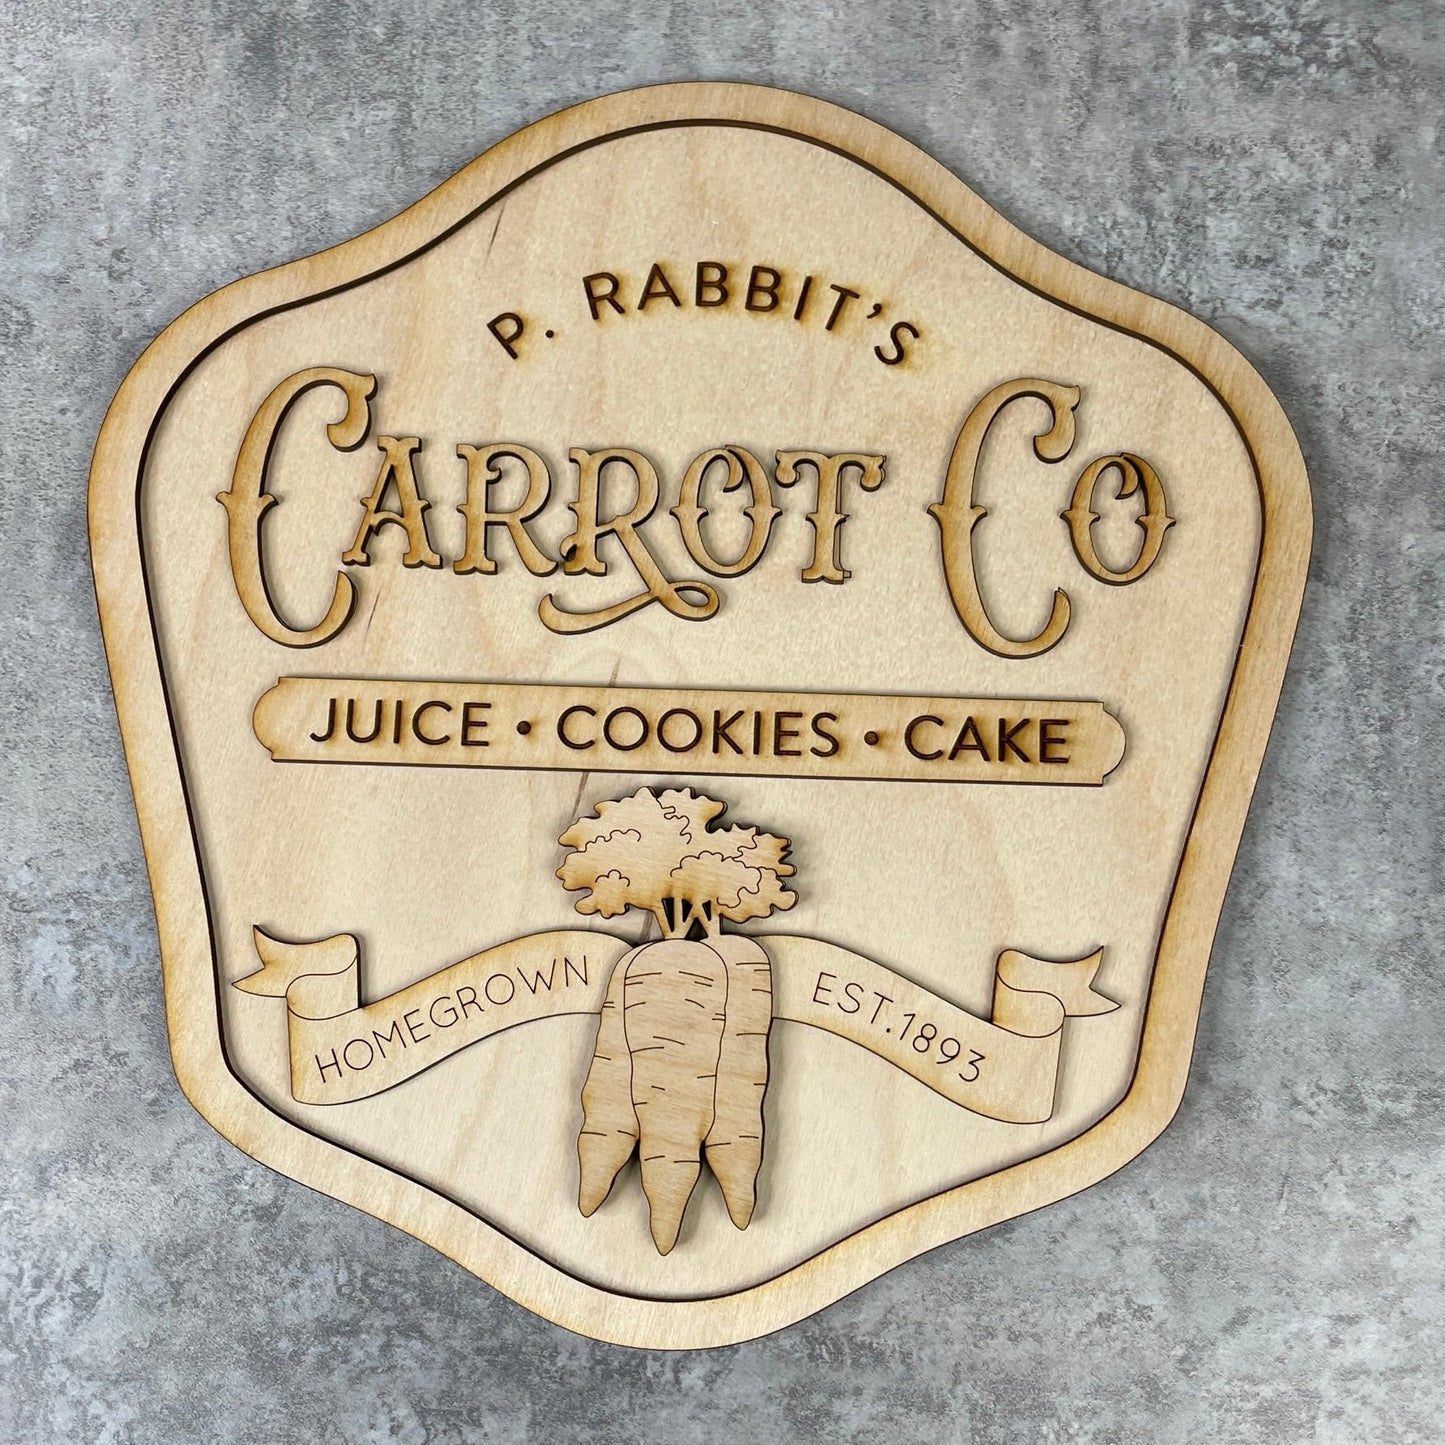 P Rabbit Carrot Co. Sign